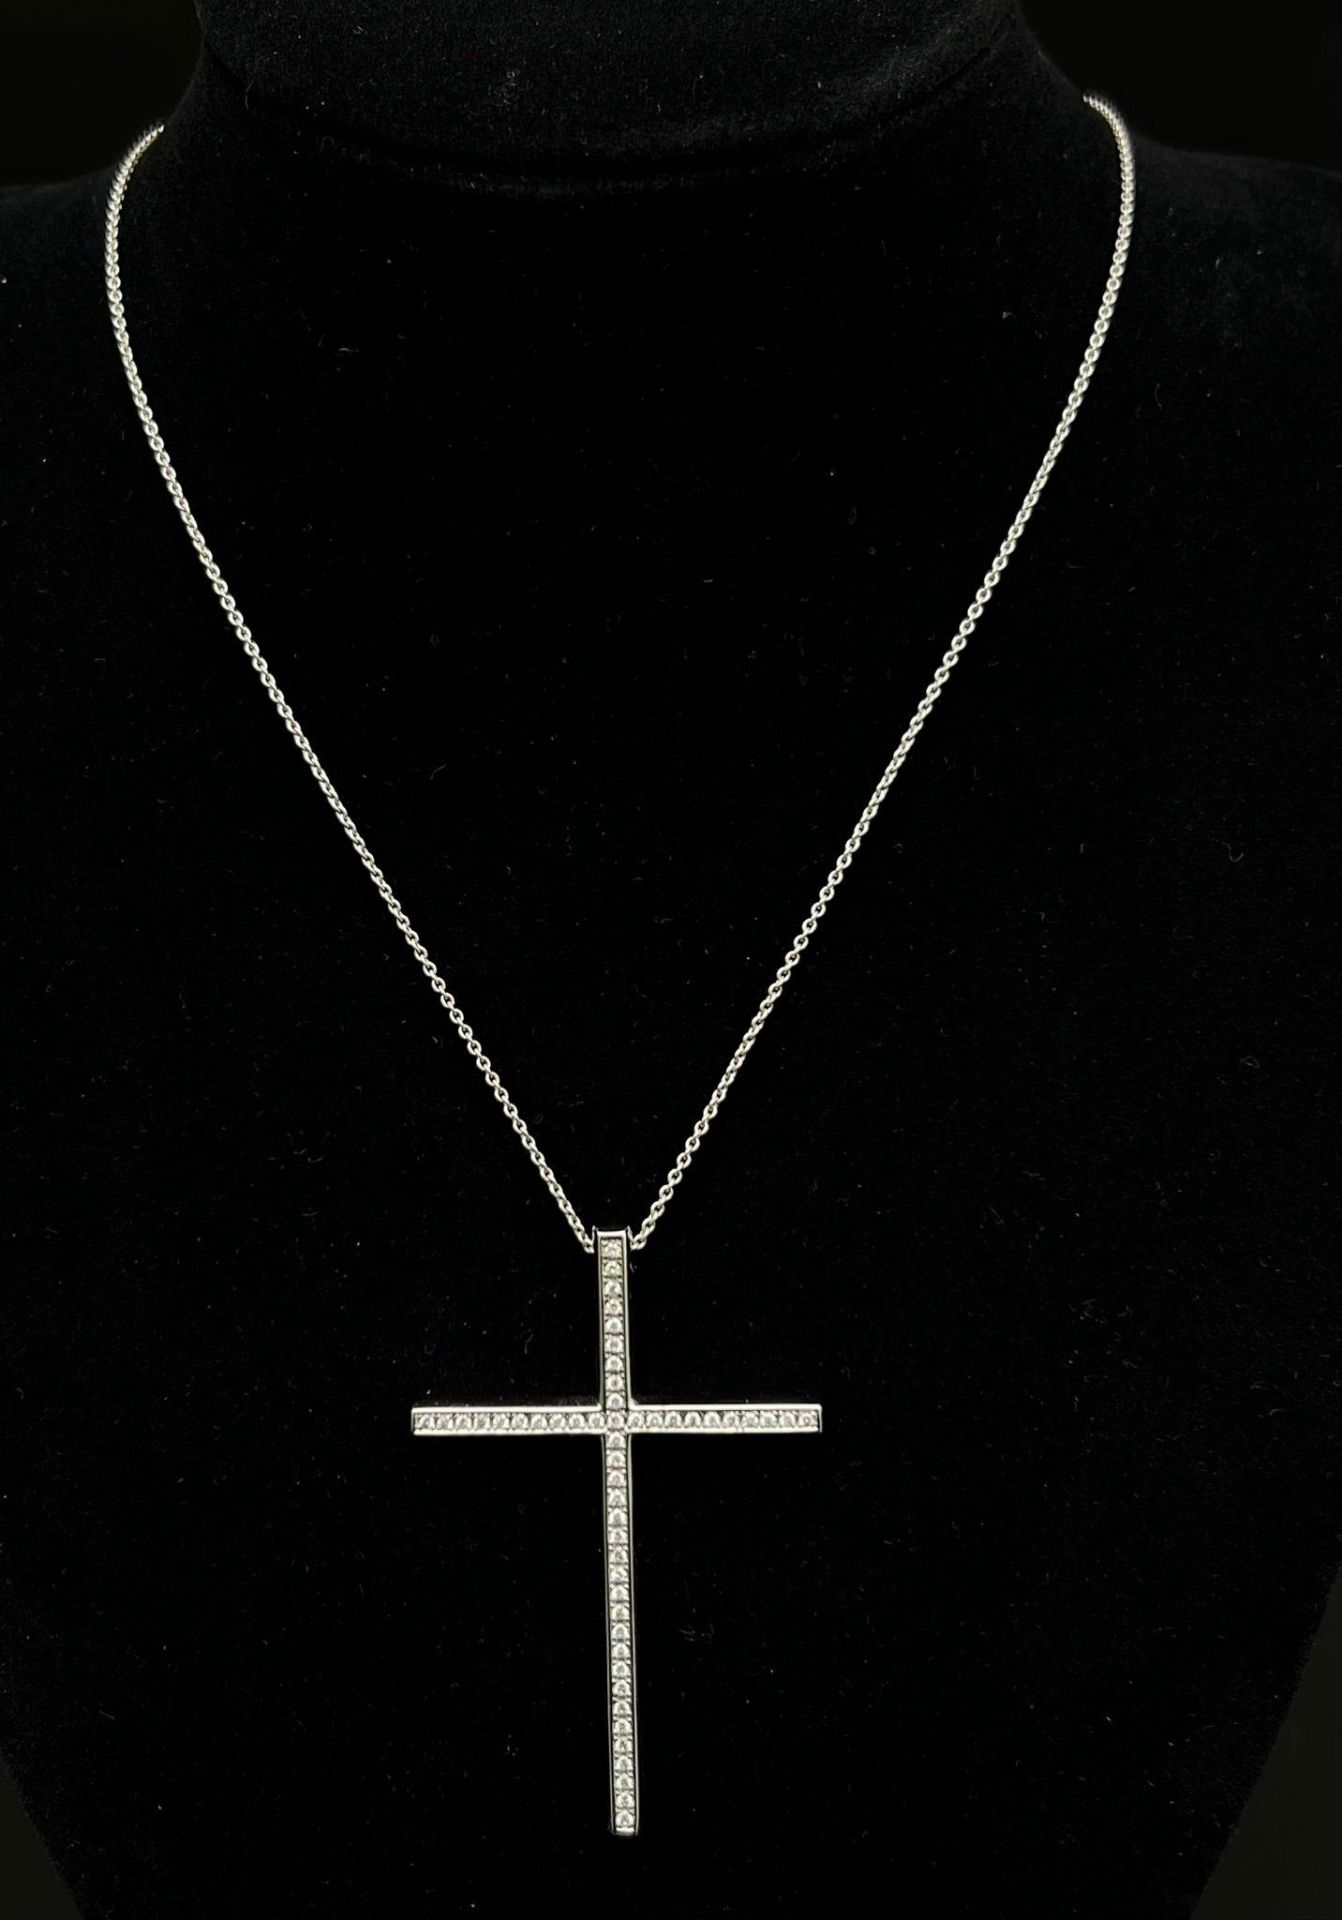 An 18K White Gold Diamond Cross Pendant on an 18K White Gold Necklace. 2ctw diamonds approx. 10.